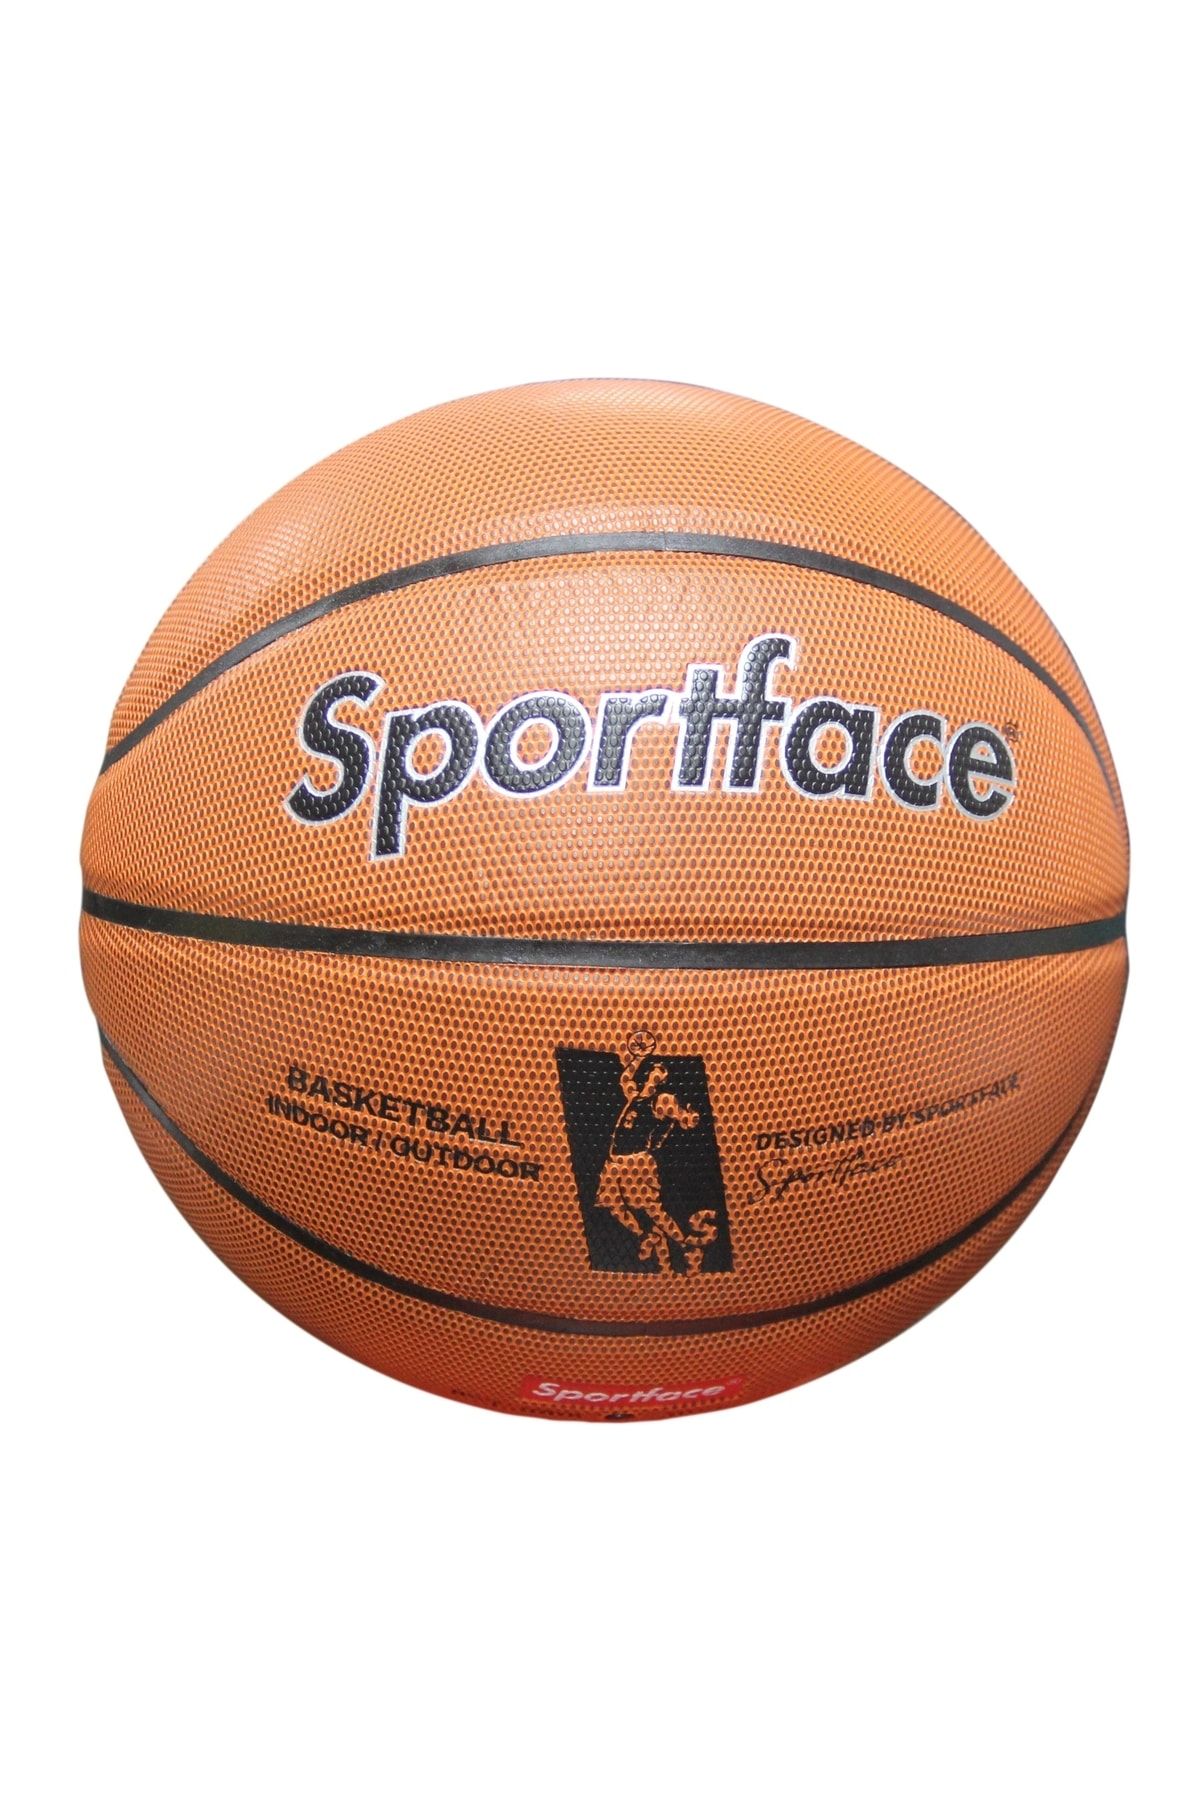 The Sport Face Sportface Sf-775 # 7 Basketbol Antrenman Topu 8 Panelli